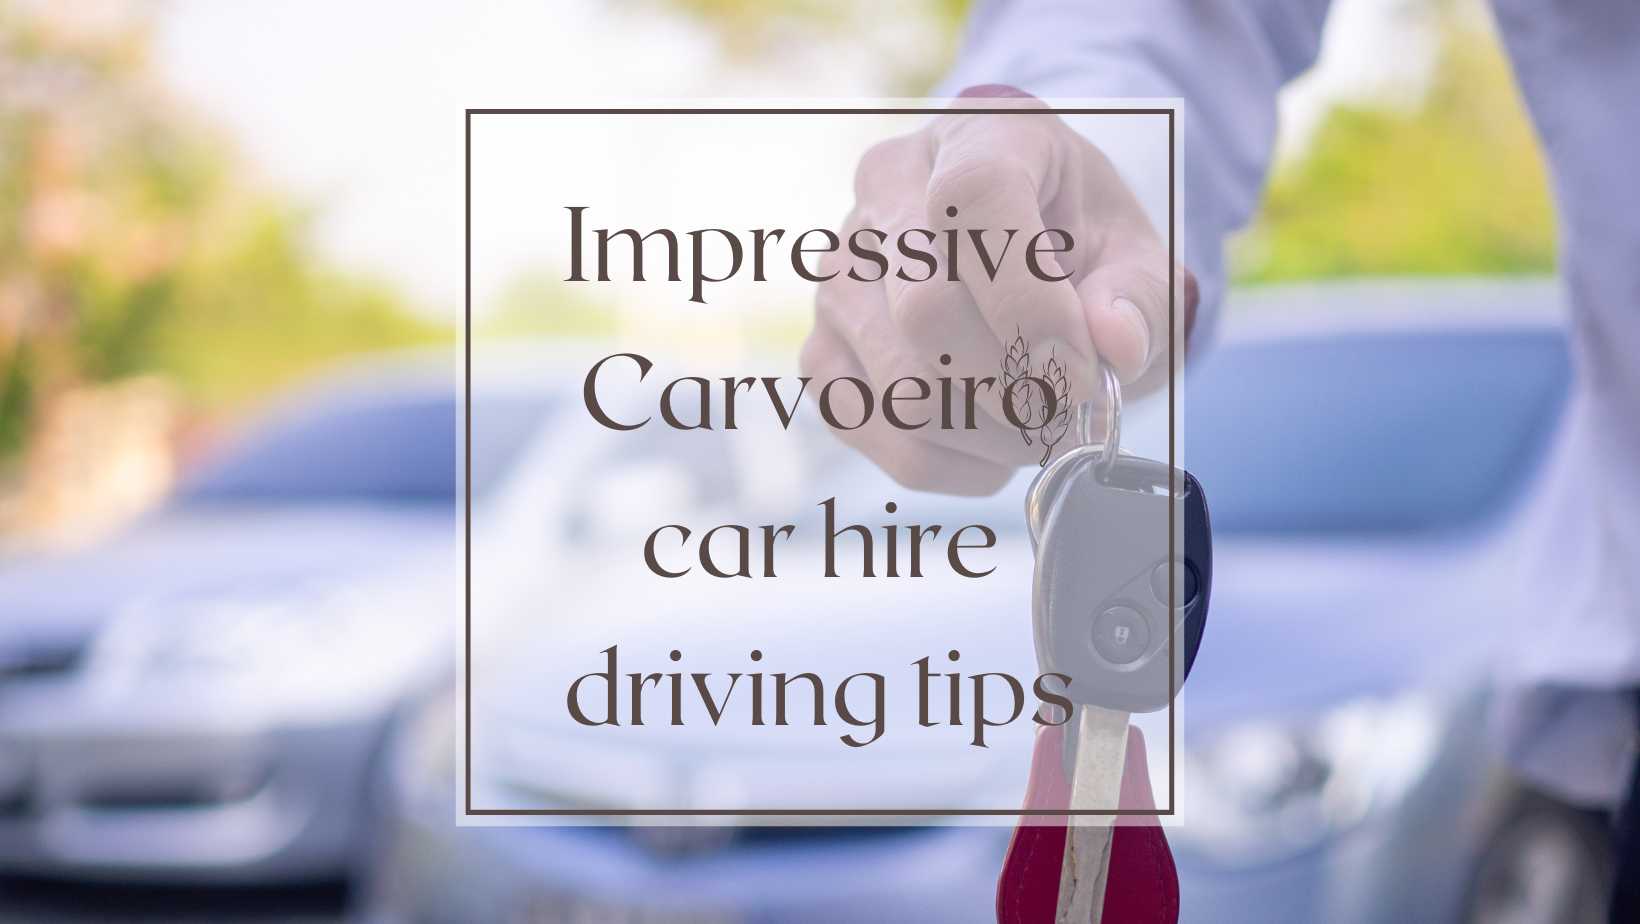 Carvoeiro car hire driving tips